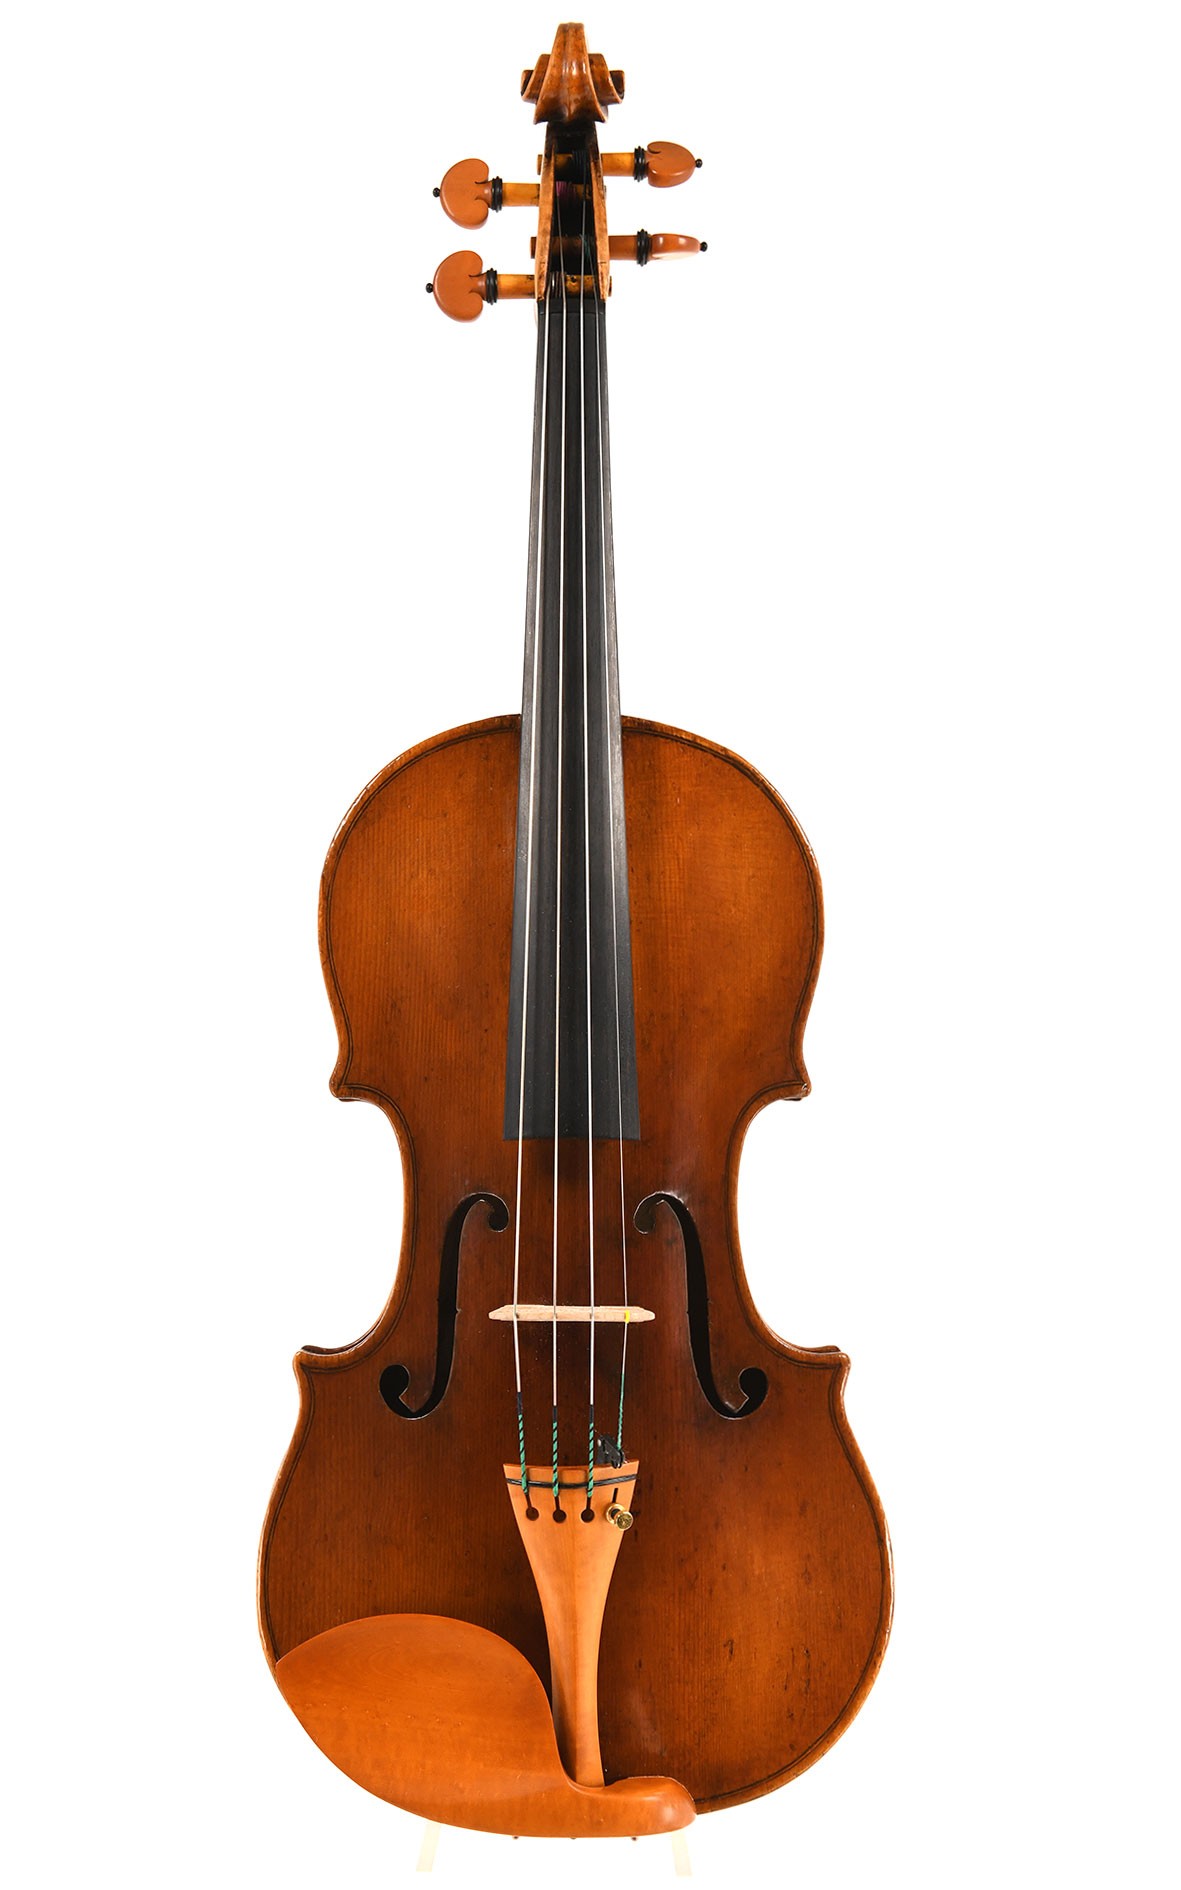 Giuseppe Gagliano: Italian violin from Naples around 1780